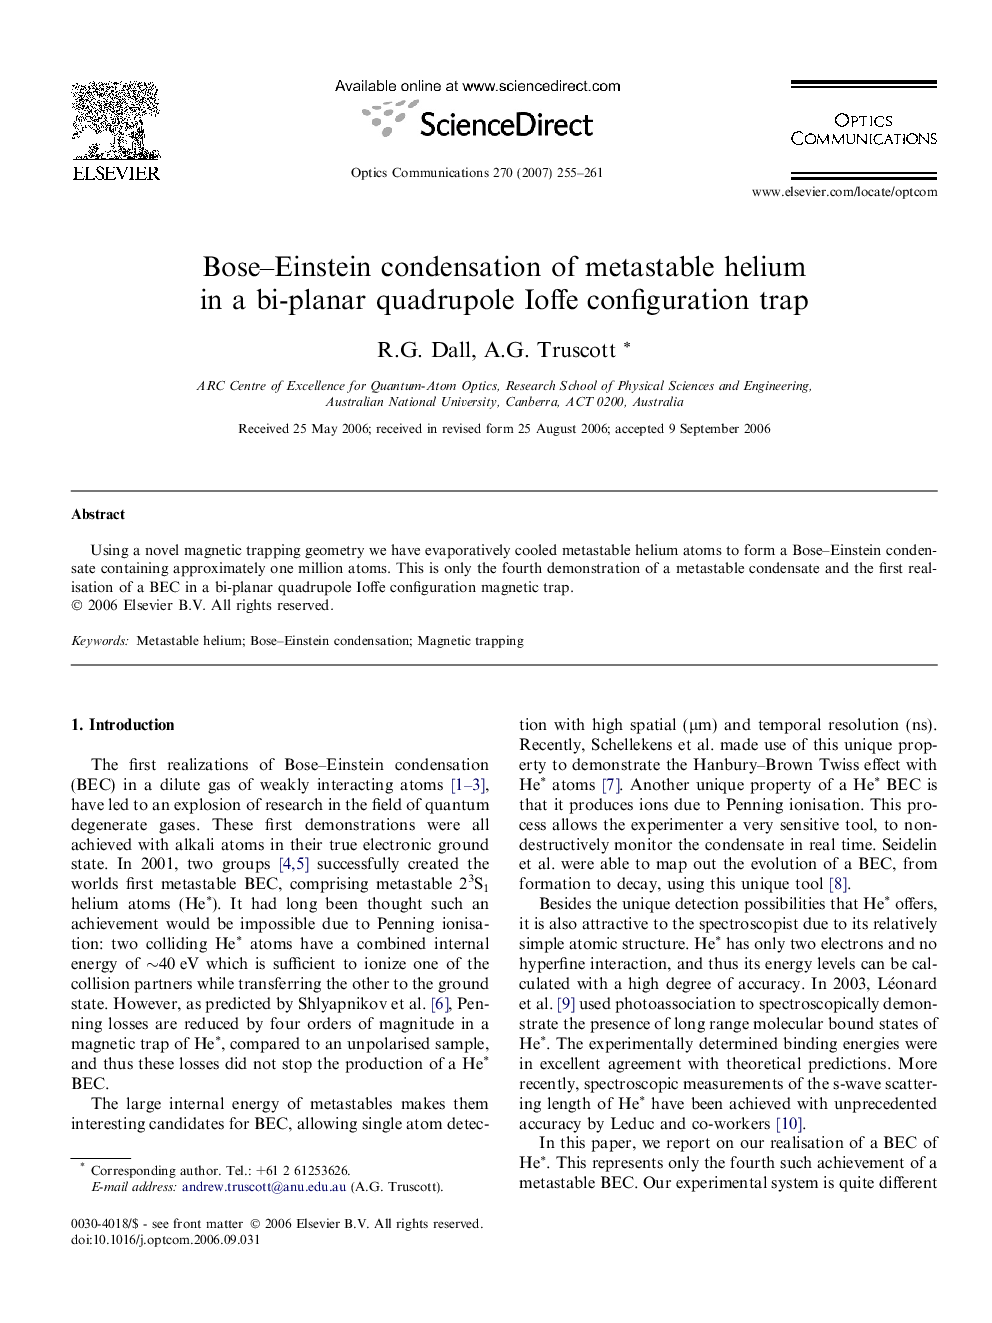 Bose–Einstein condensation of metastable helium in a bi-planar quadrupole Ioffe configuration trap